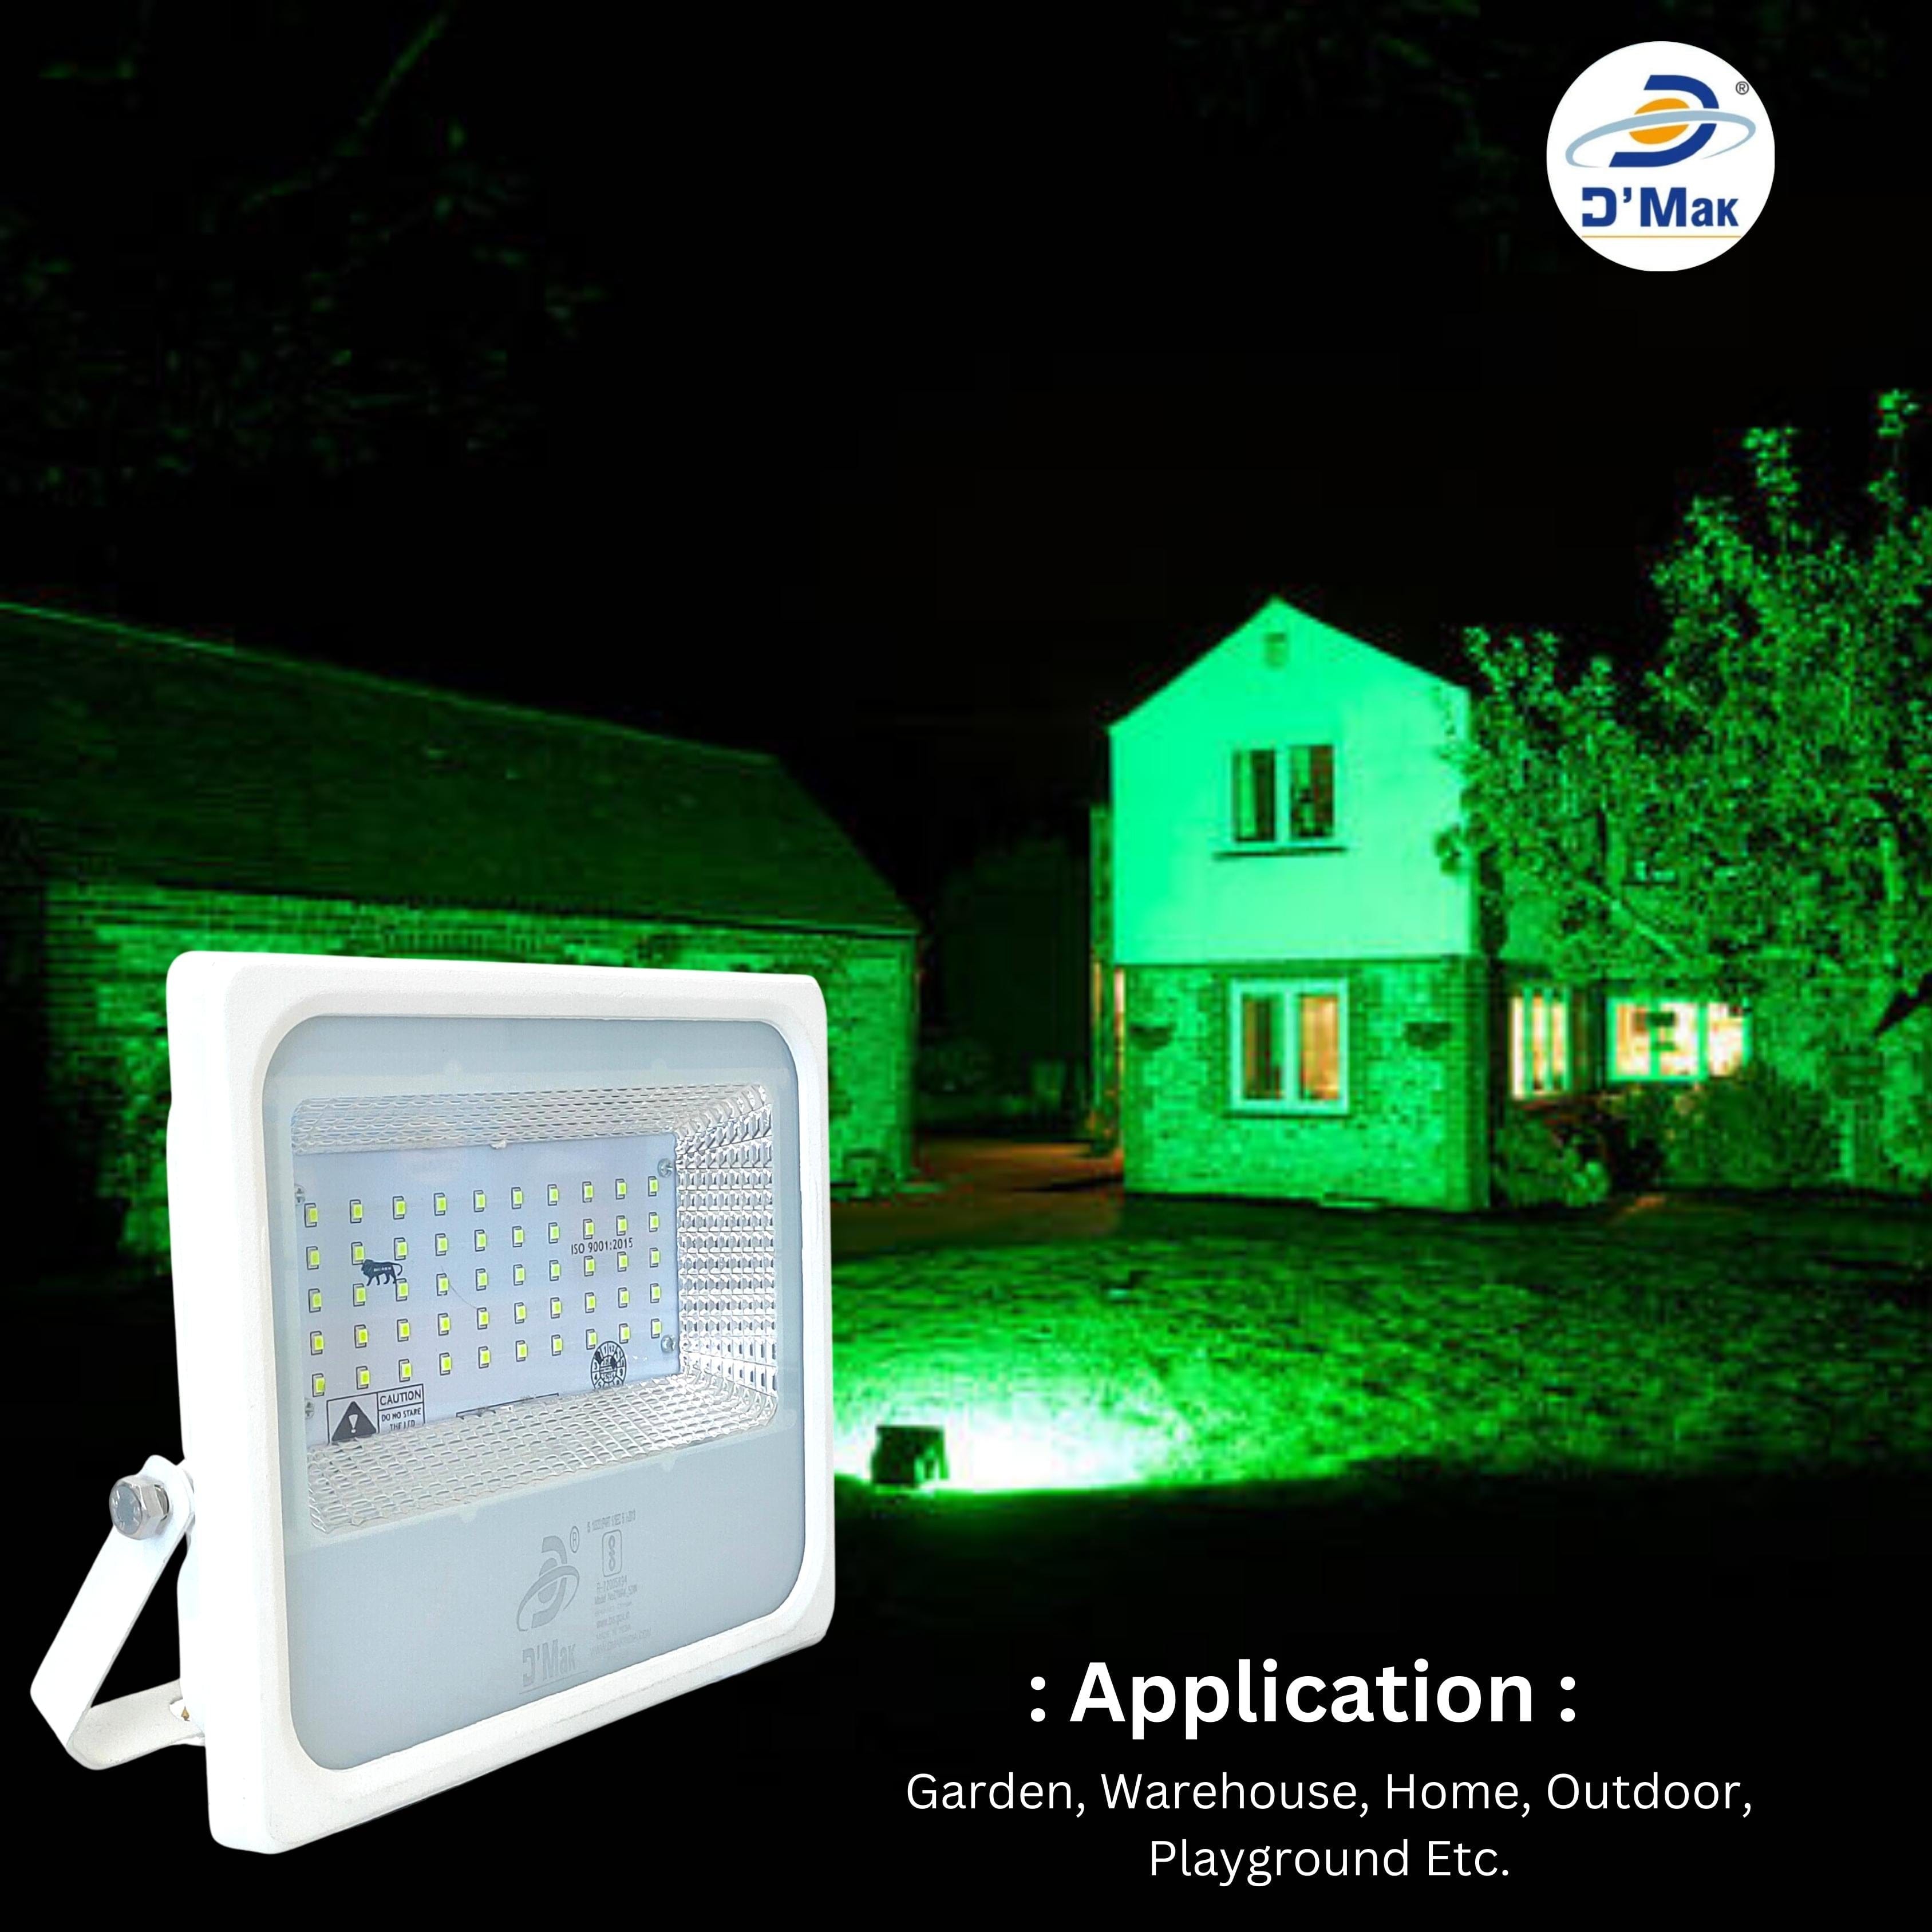 50 Watt LED Down Chawk Flood Light White Body Waterproof IP65 for Outdoor Purposes